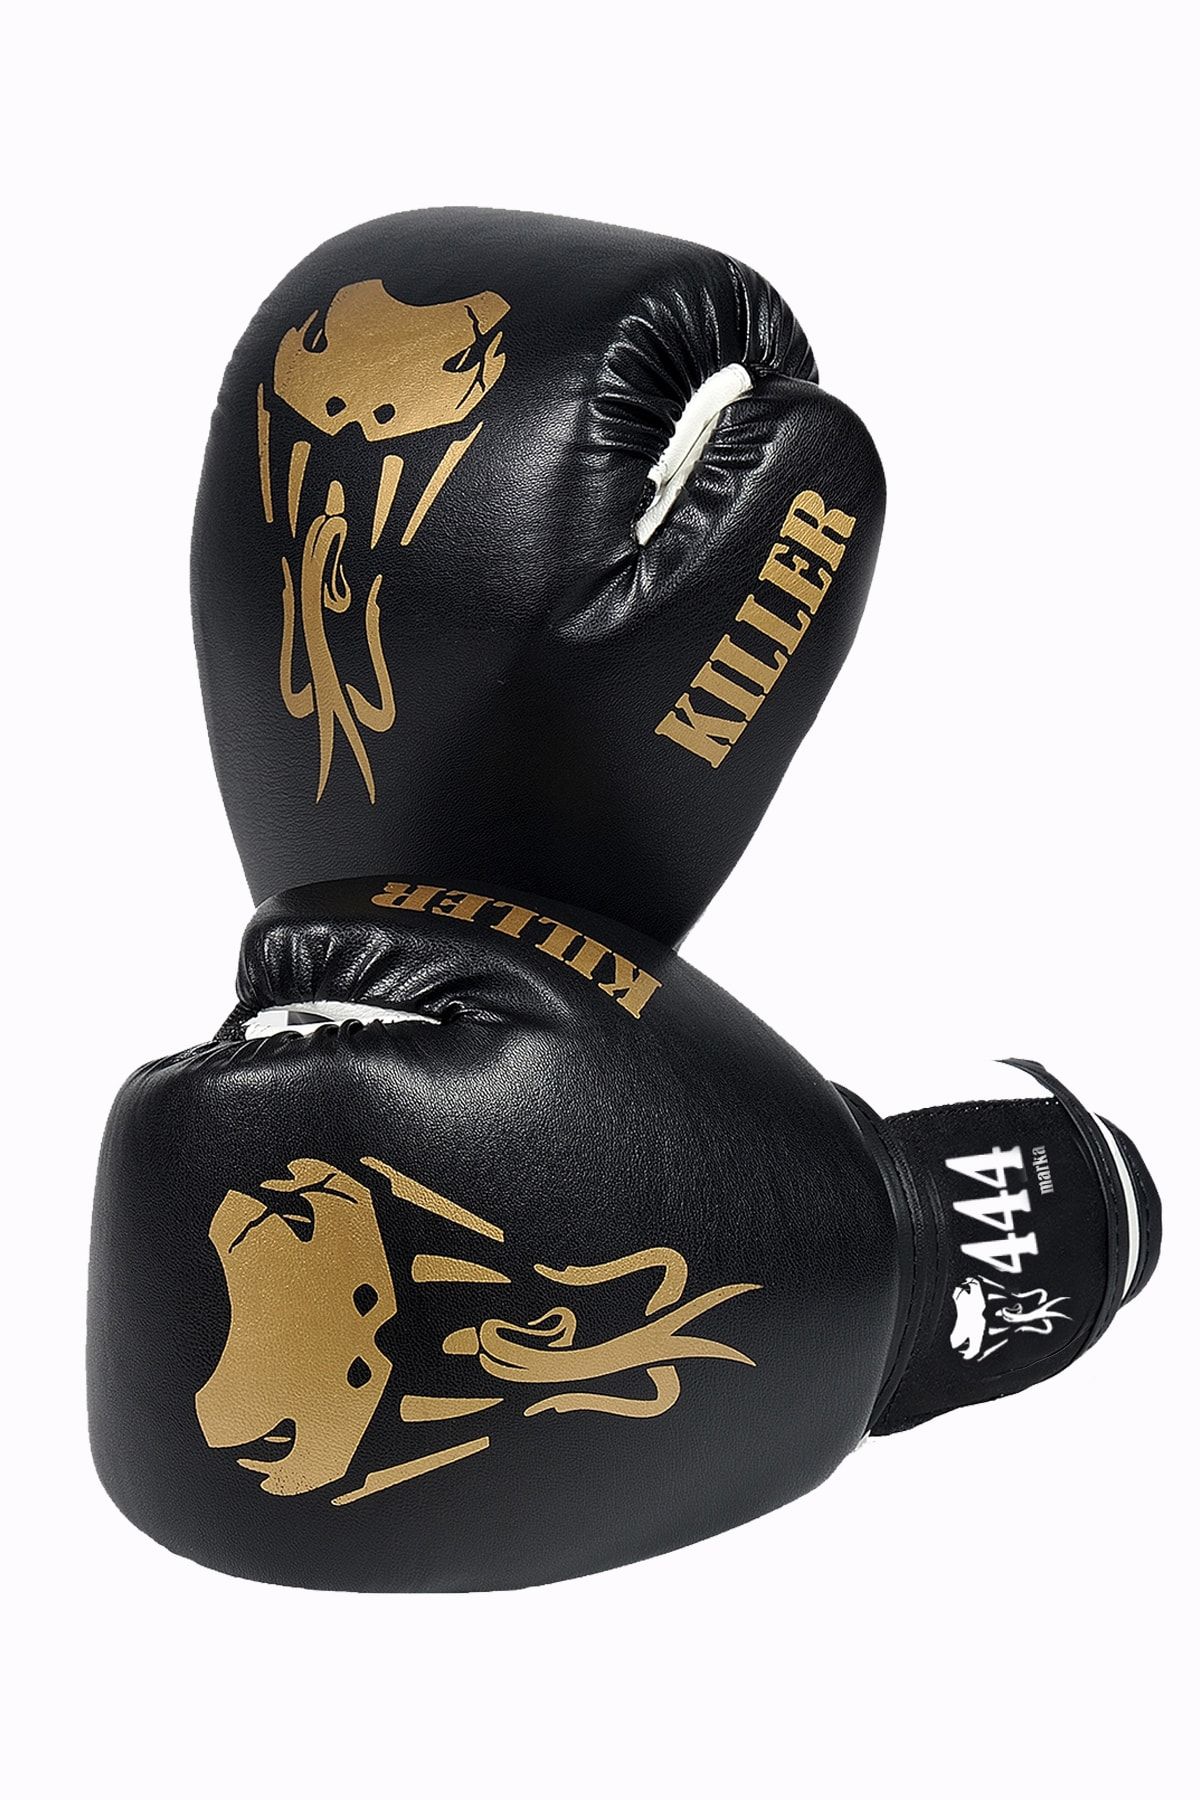 GAZELMANYA Kıller Boks Eldiveni Kick Boks Eldiveni Boxing Gloves Muay Thai Eldiveni